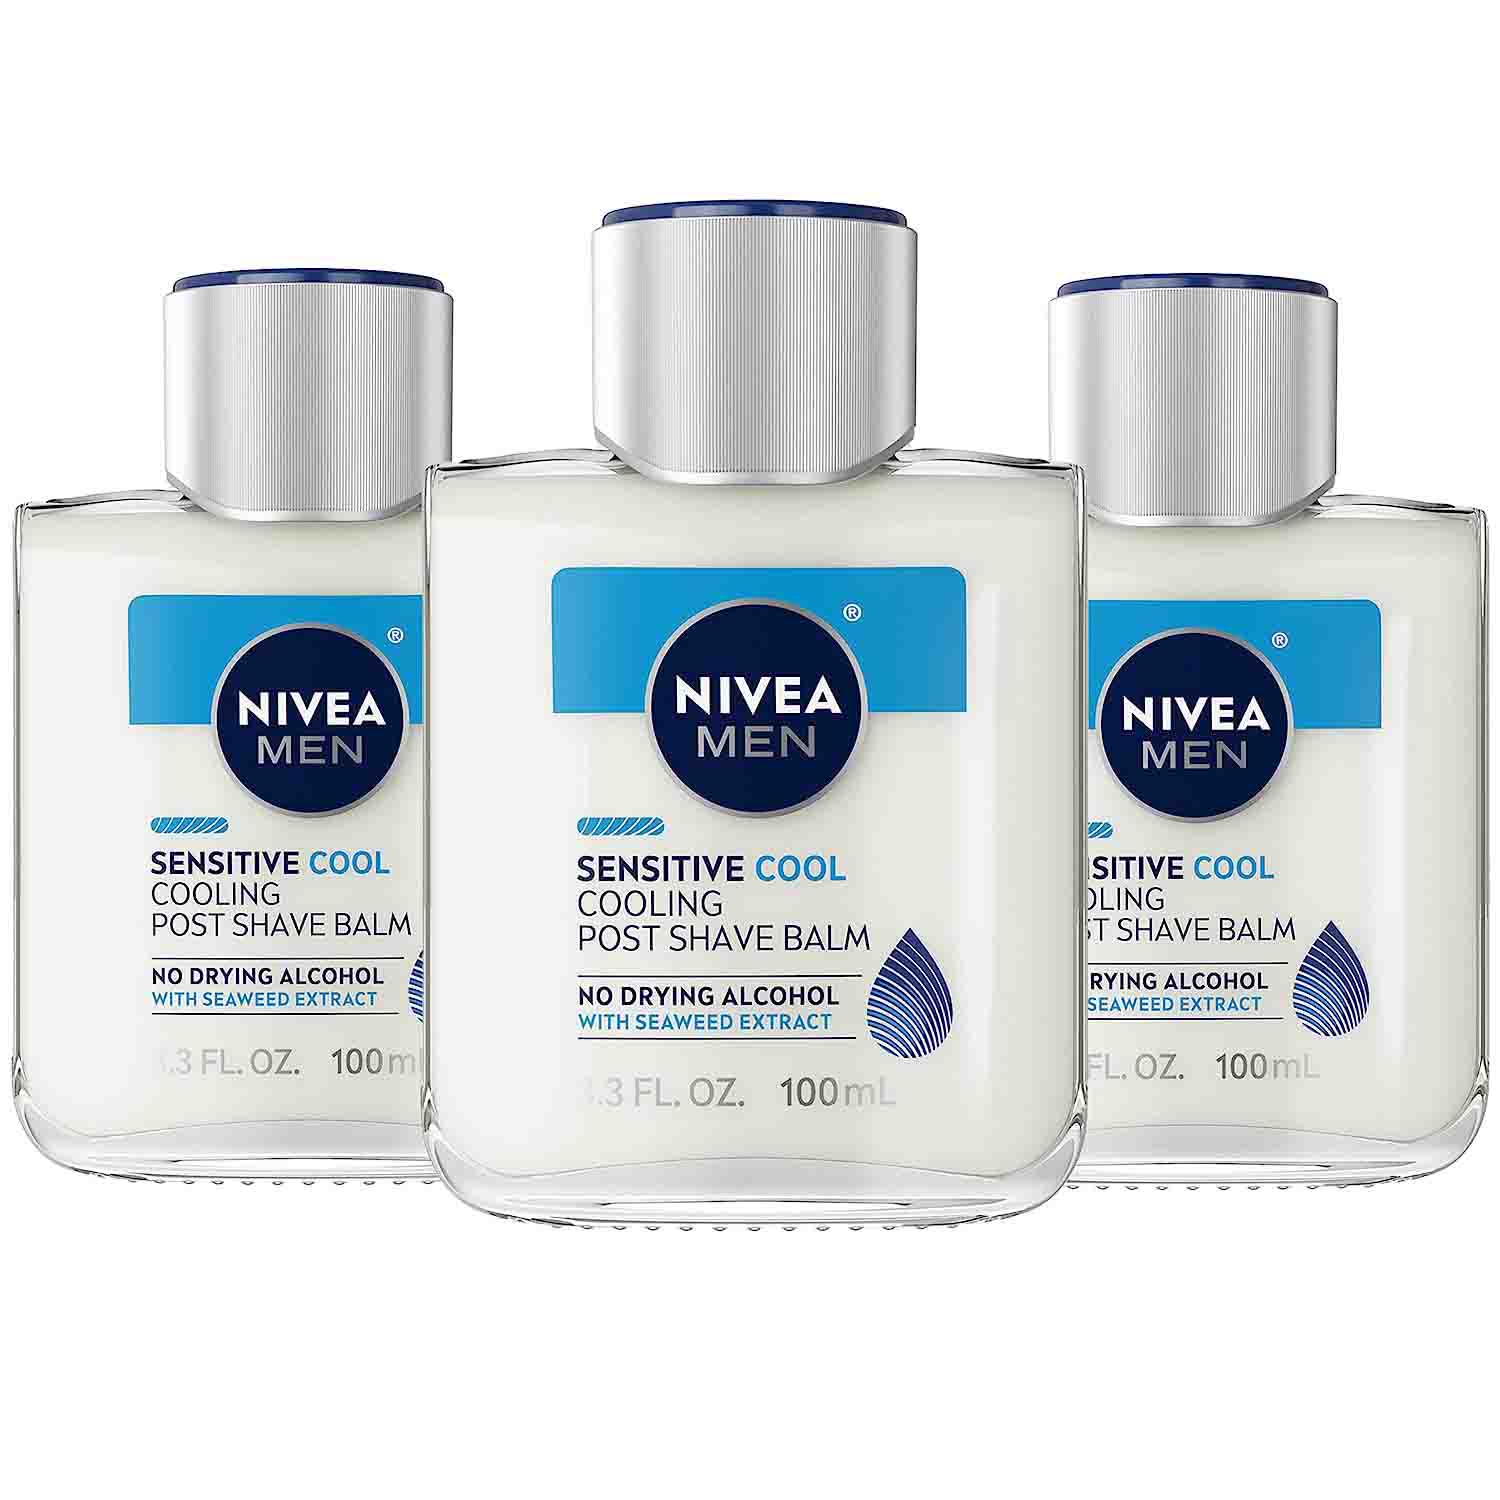 three bottles of nivea aftershave